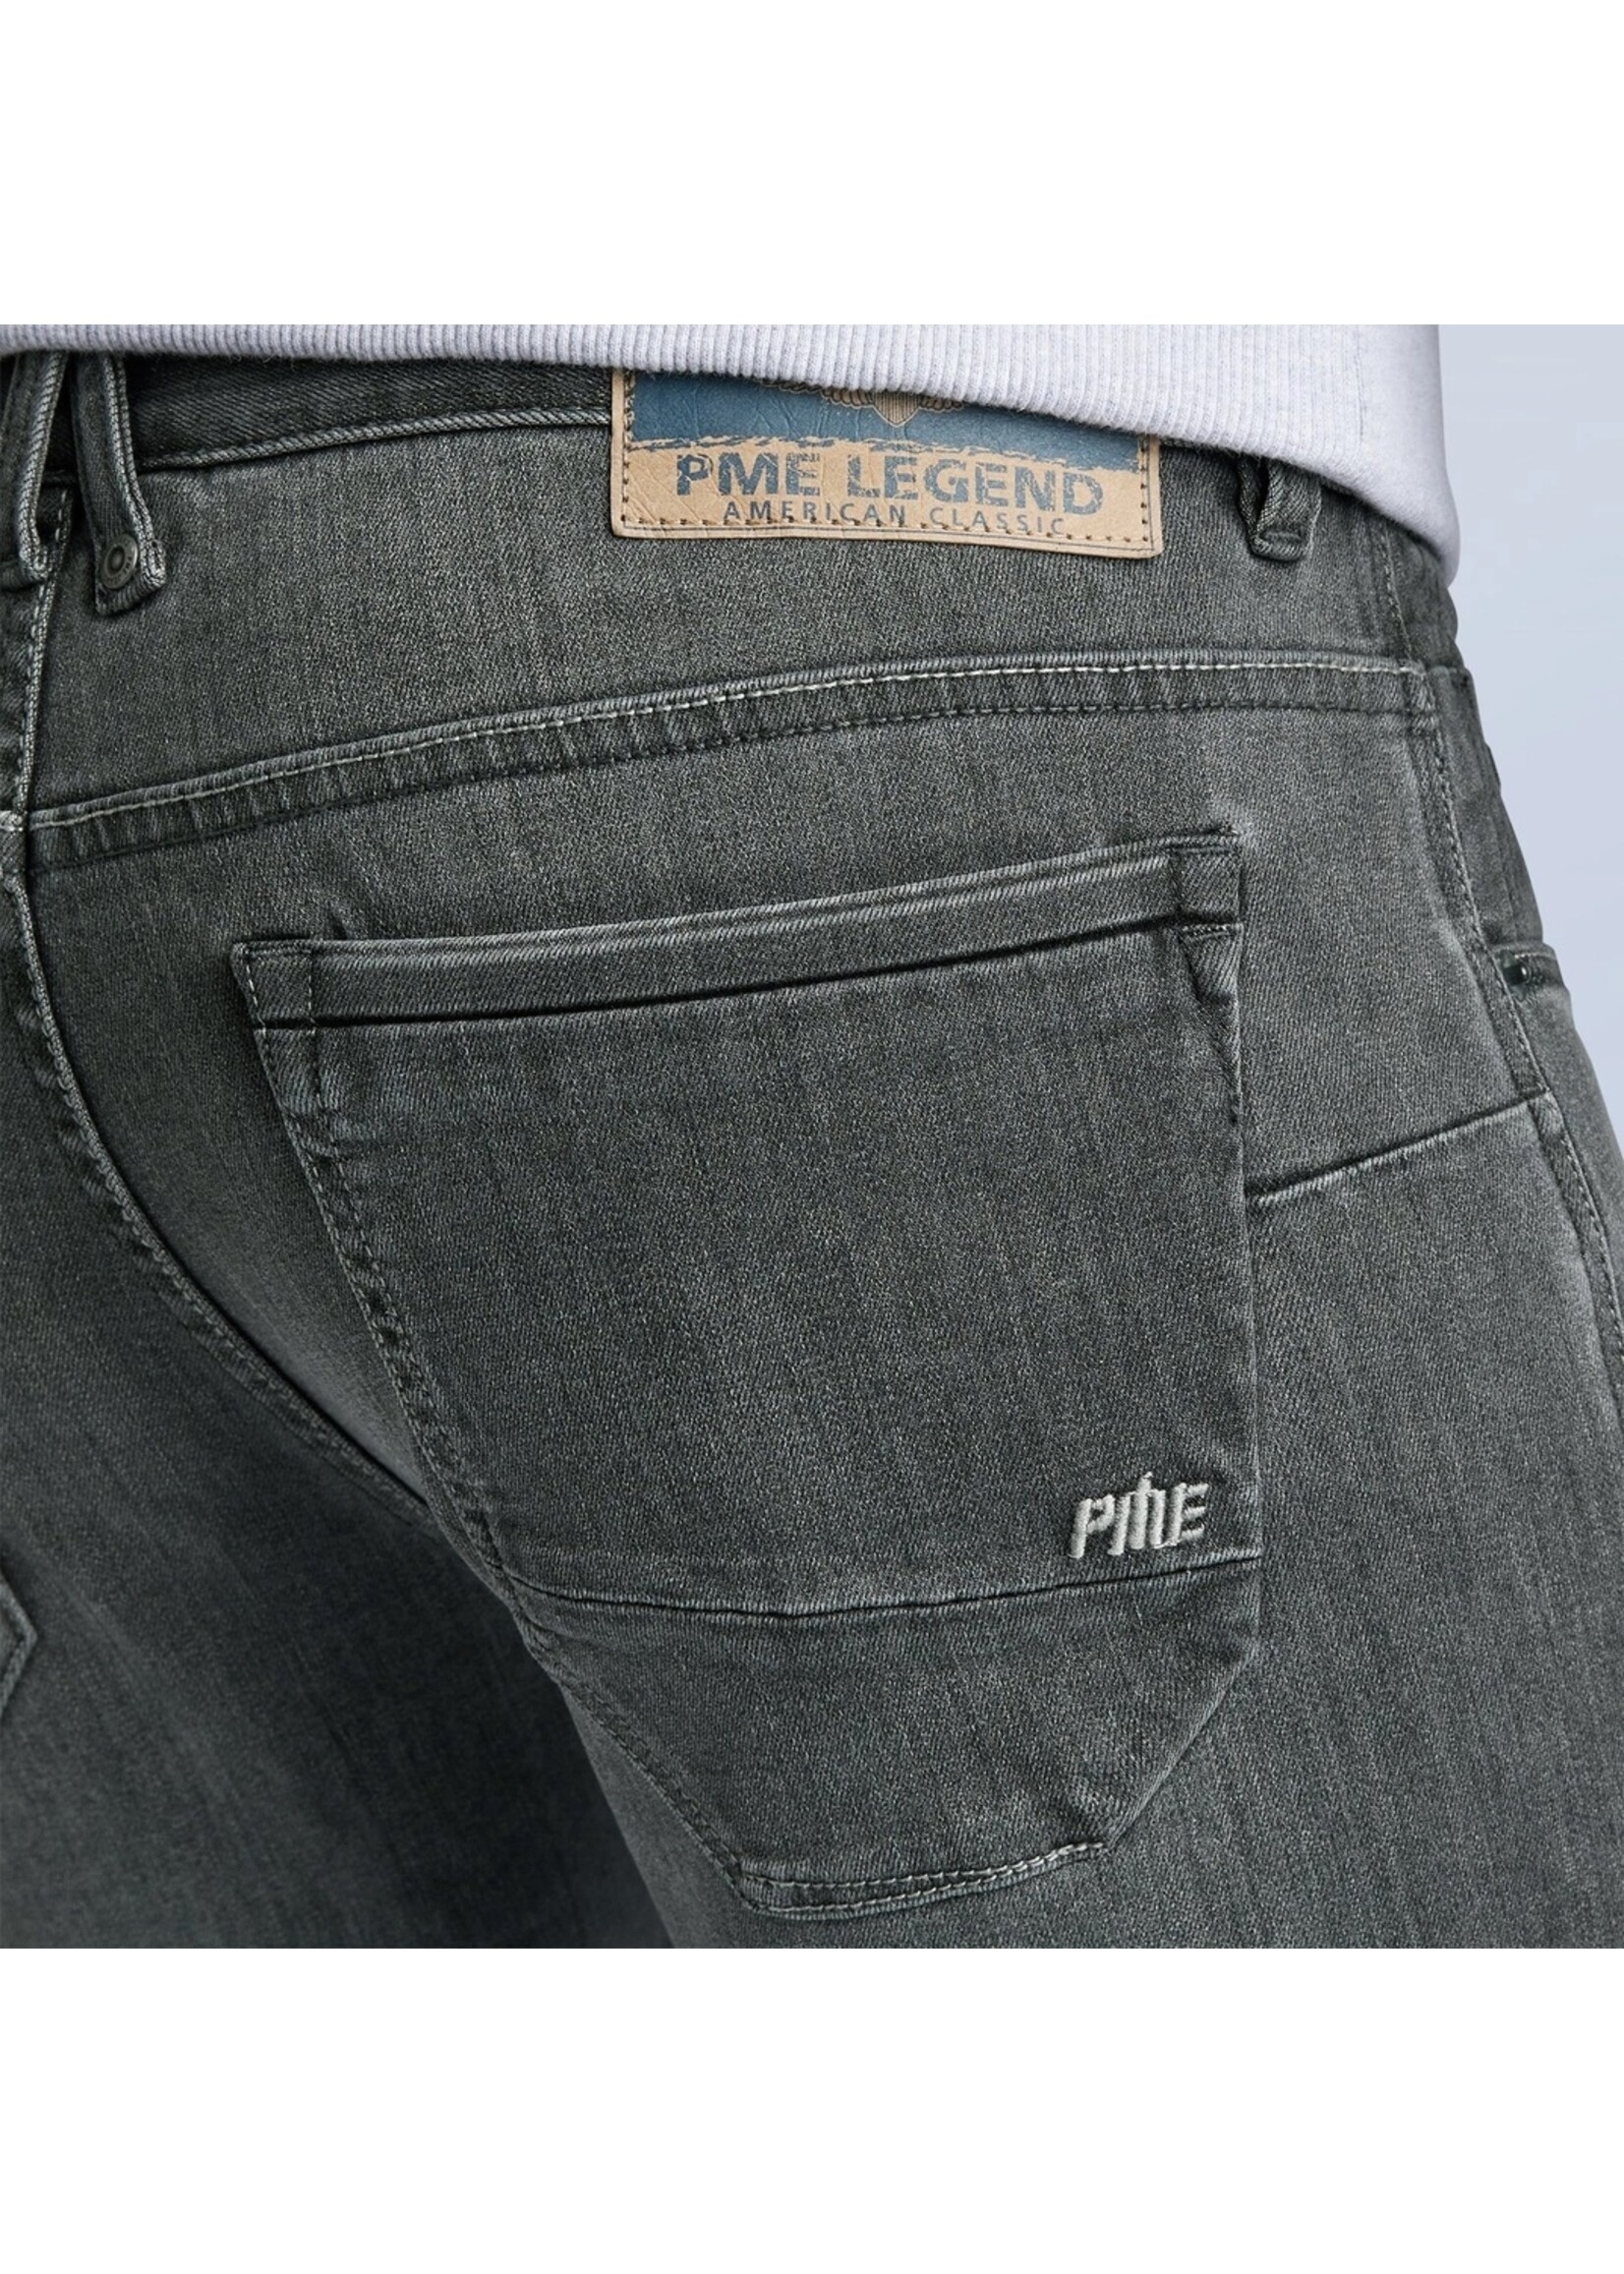 PME-Legend Nightflight Jeans Stoned Mid Grey Lengte 34